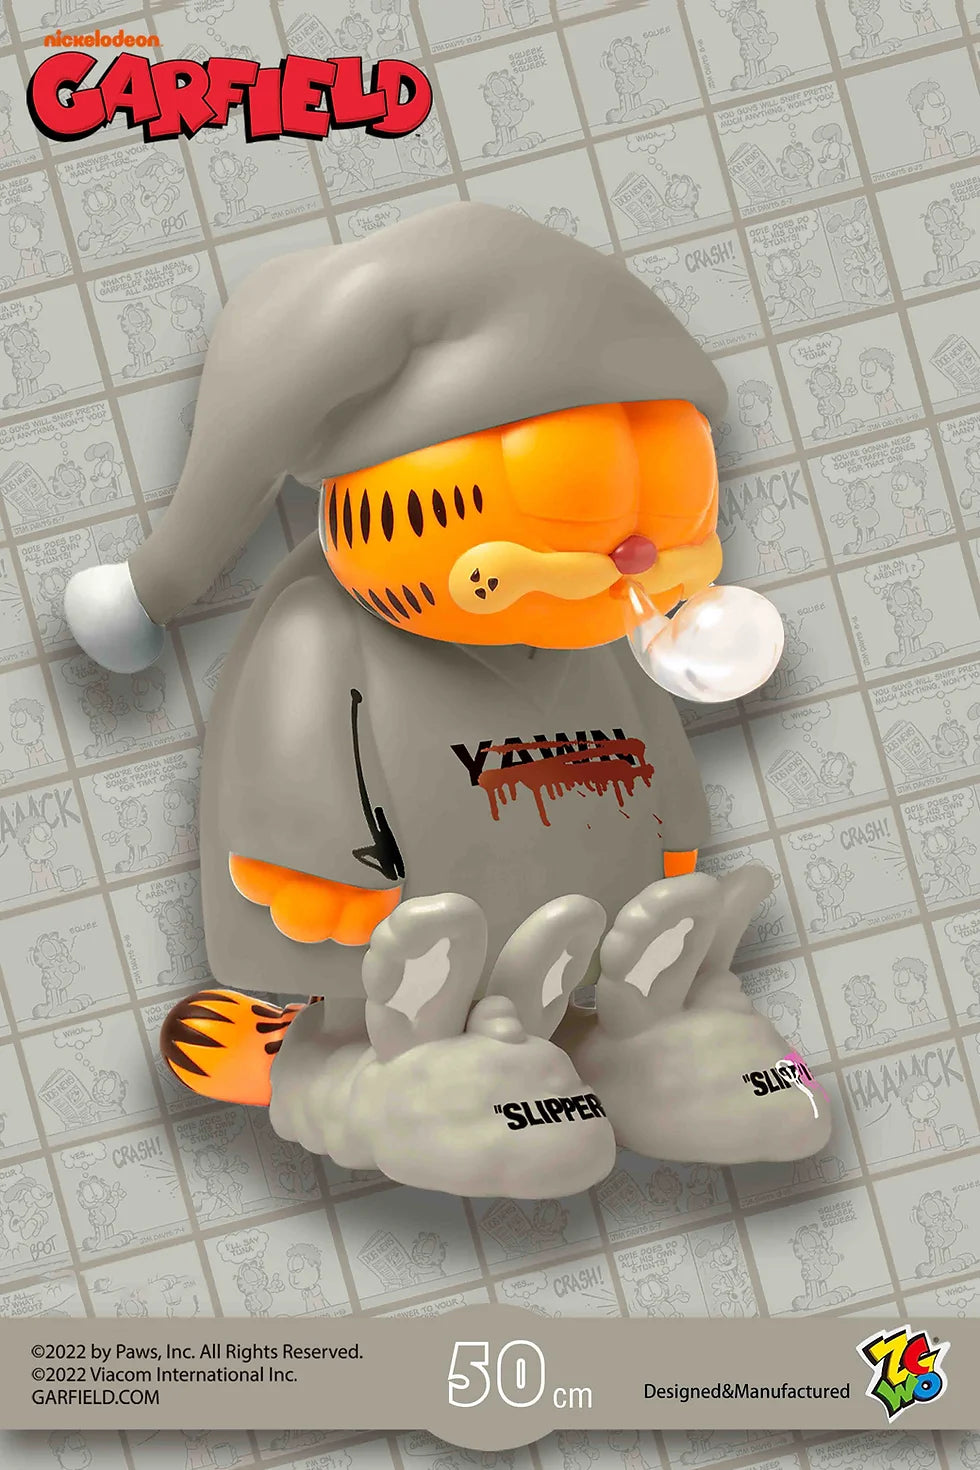 Garfield - "Je ne dors pas" 50 cm Bâillement